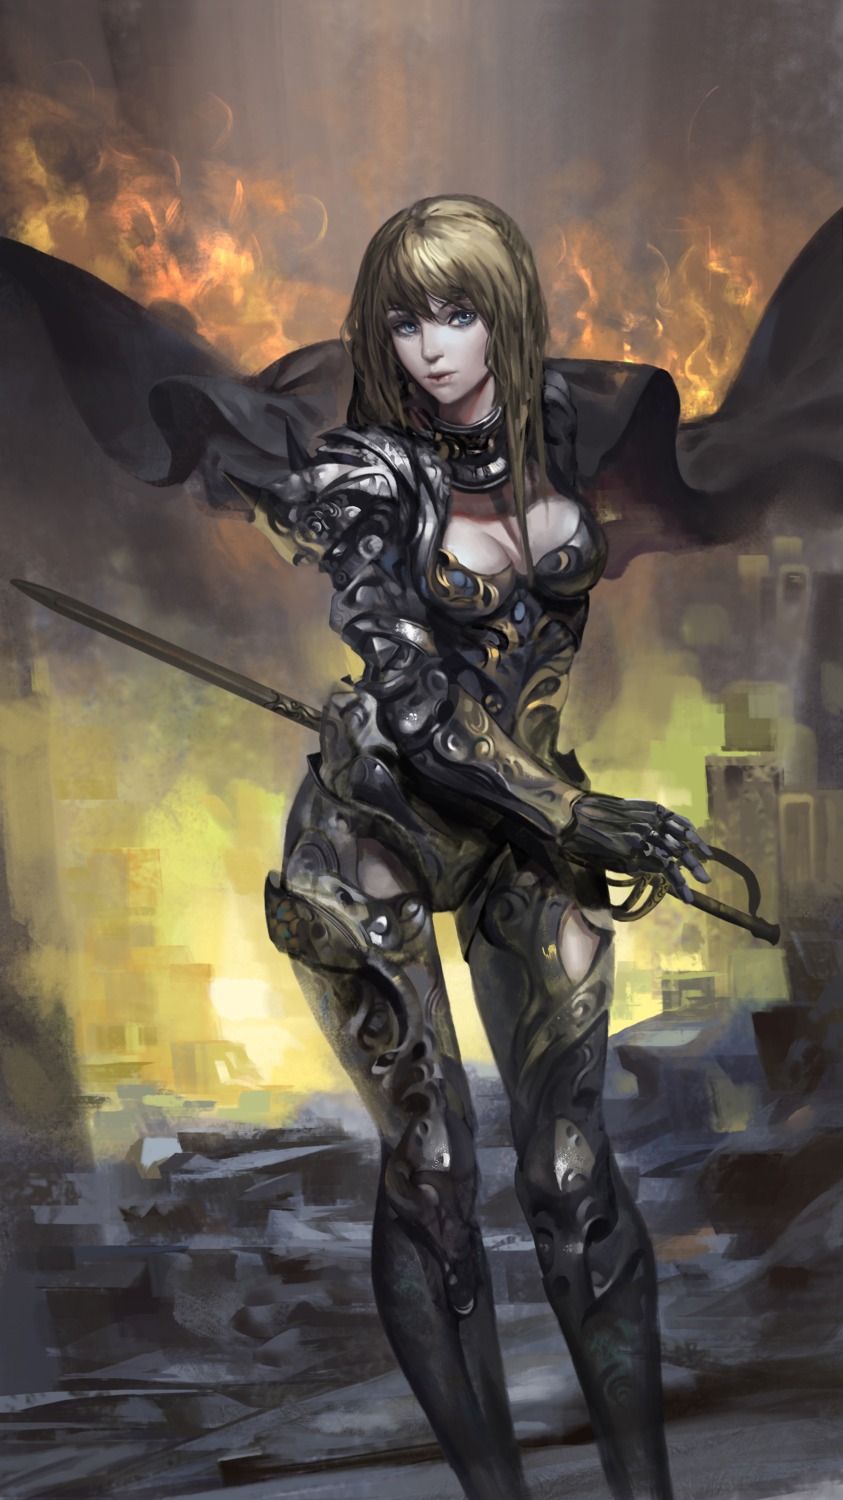 armor baka_(mh6516620) cleavage leotard sword